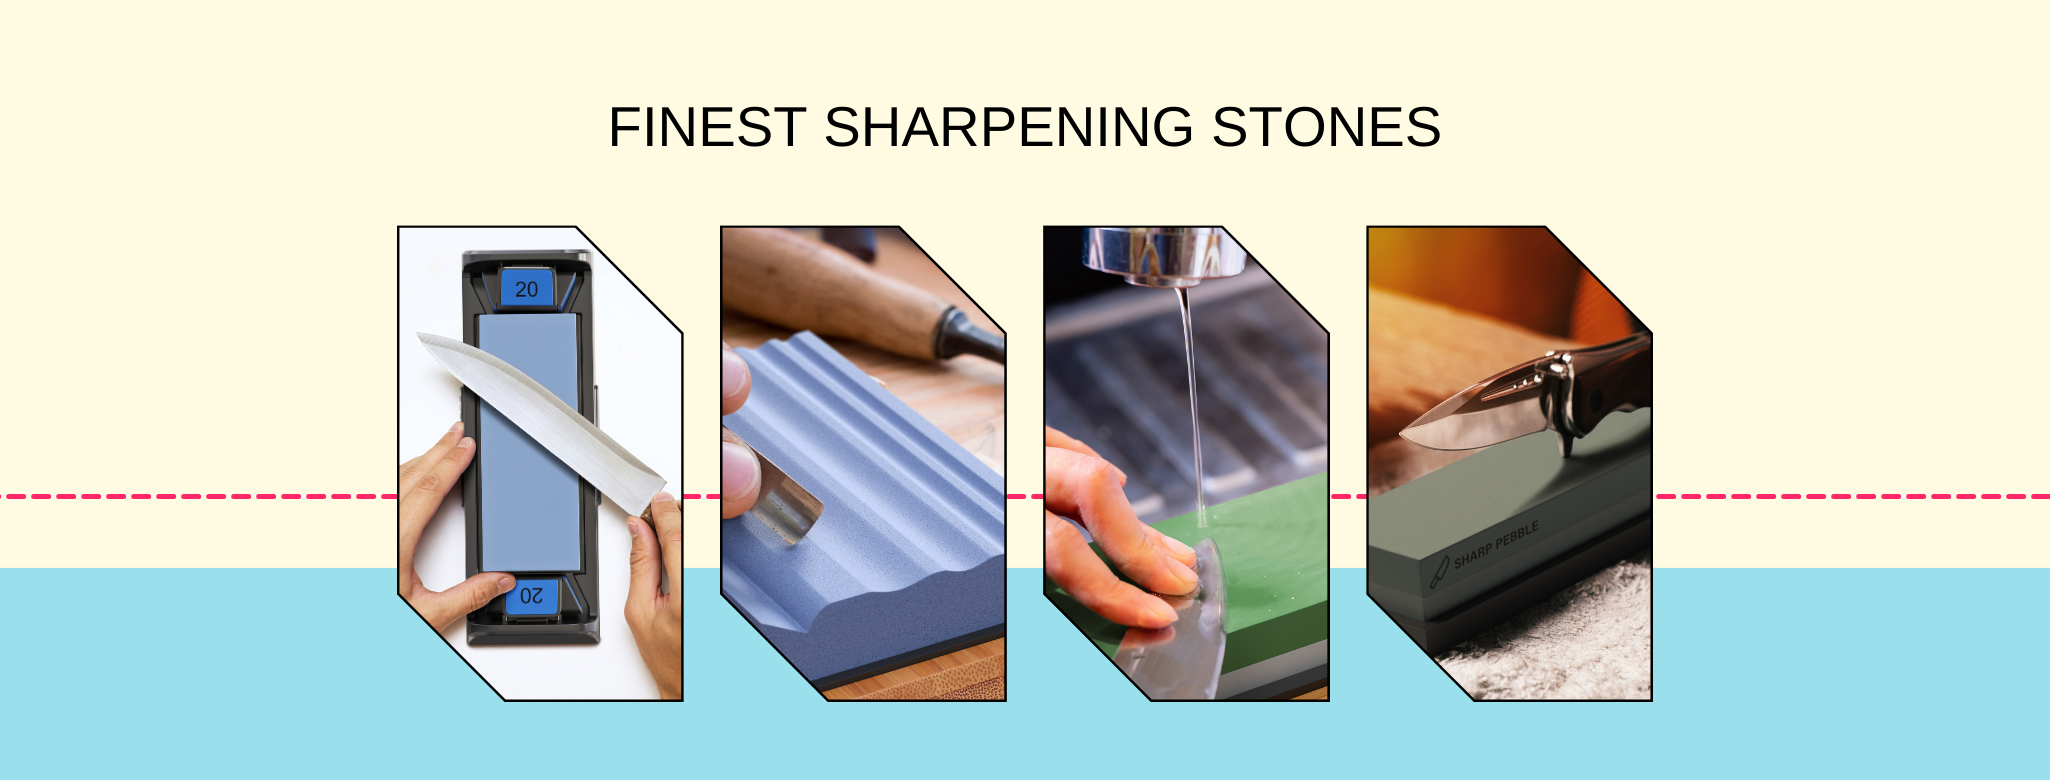 finest sharpening stones